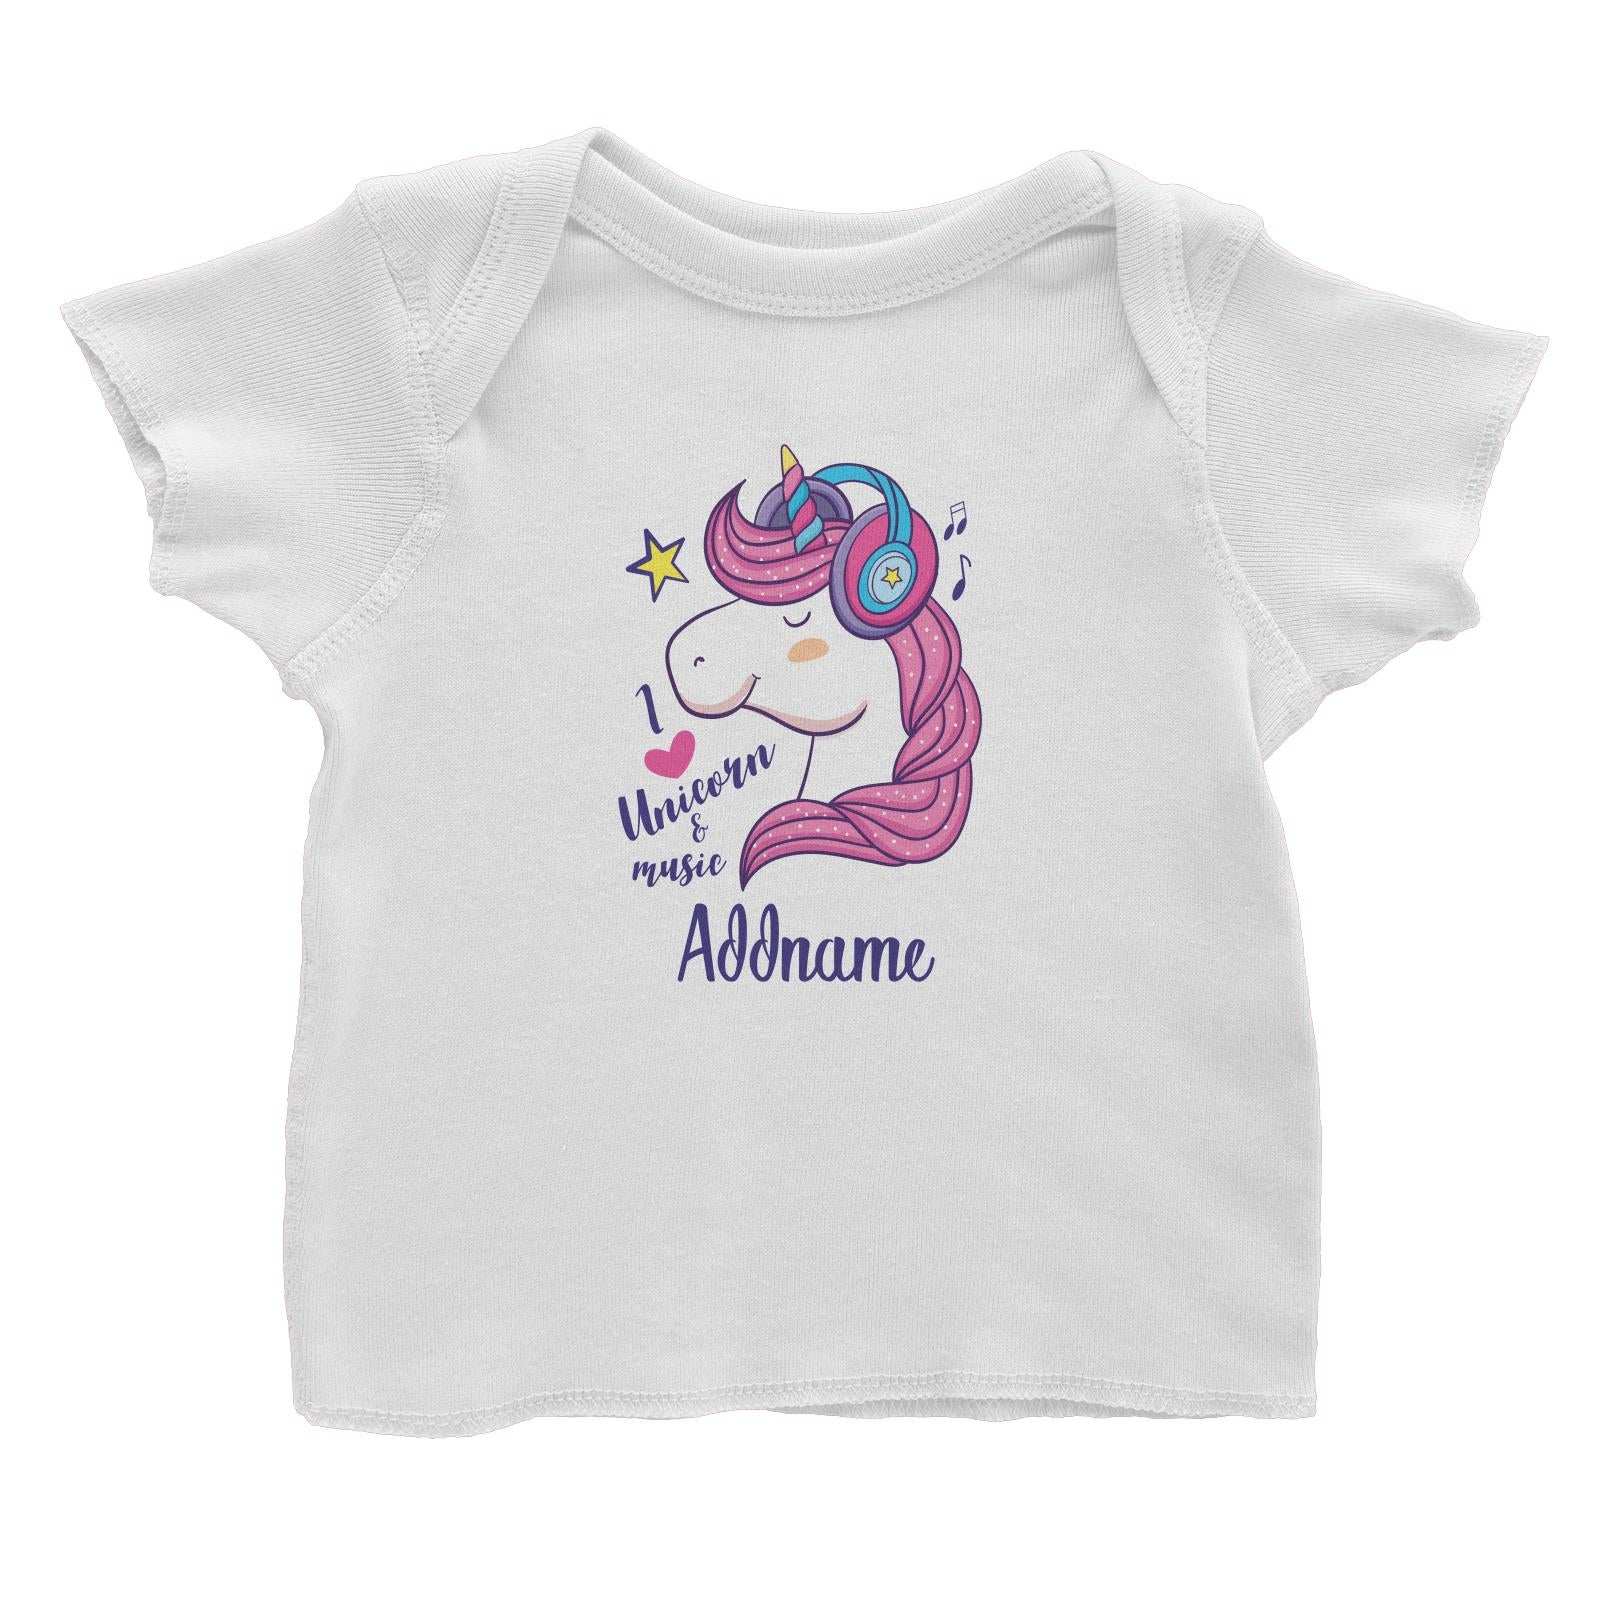 Cool Cute Unicorn I Love Unicorn & Music Addname Baby T-Shirt